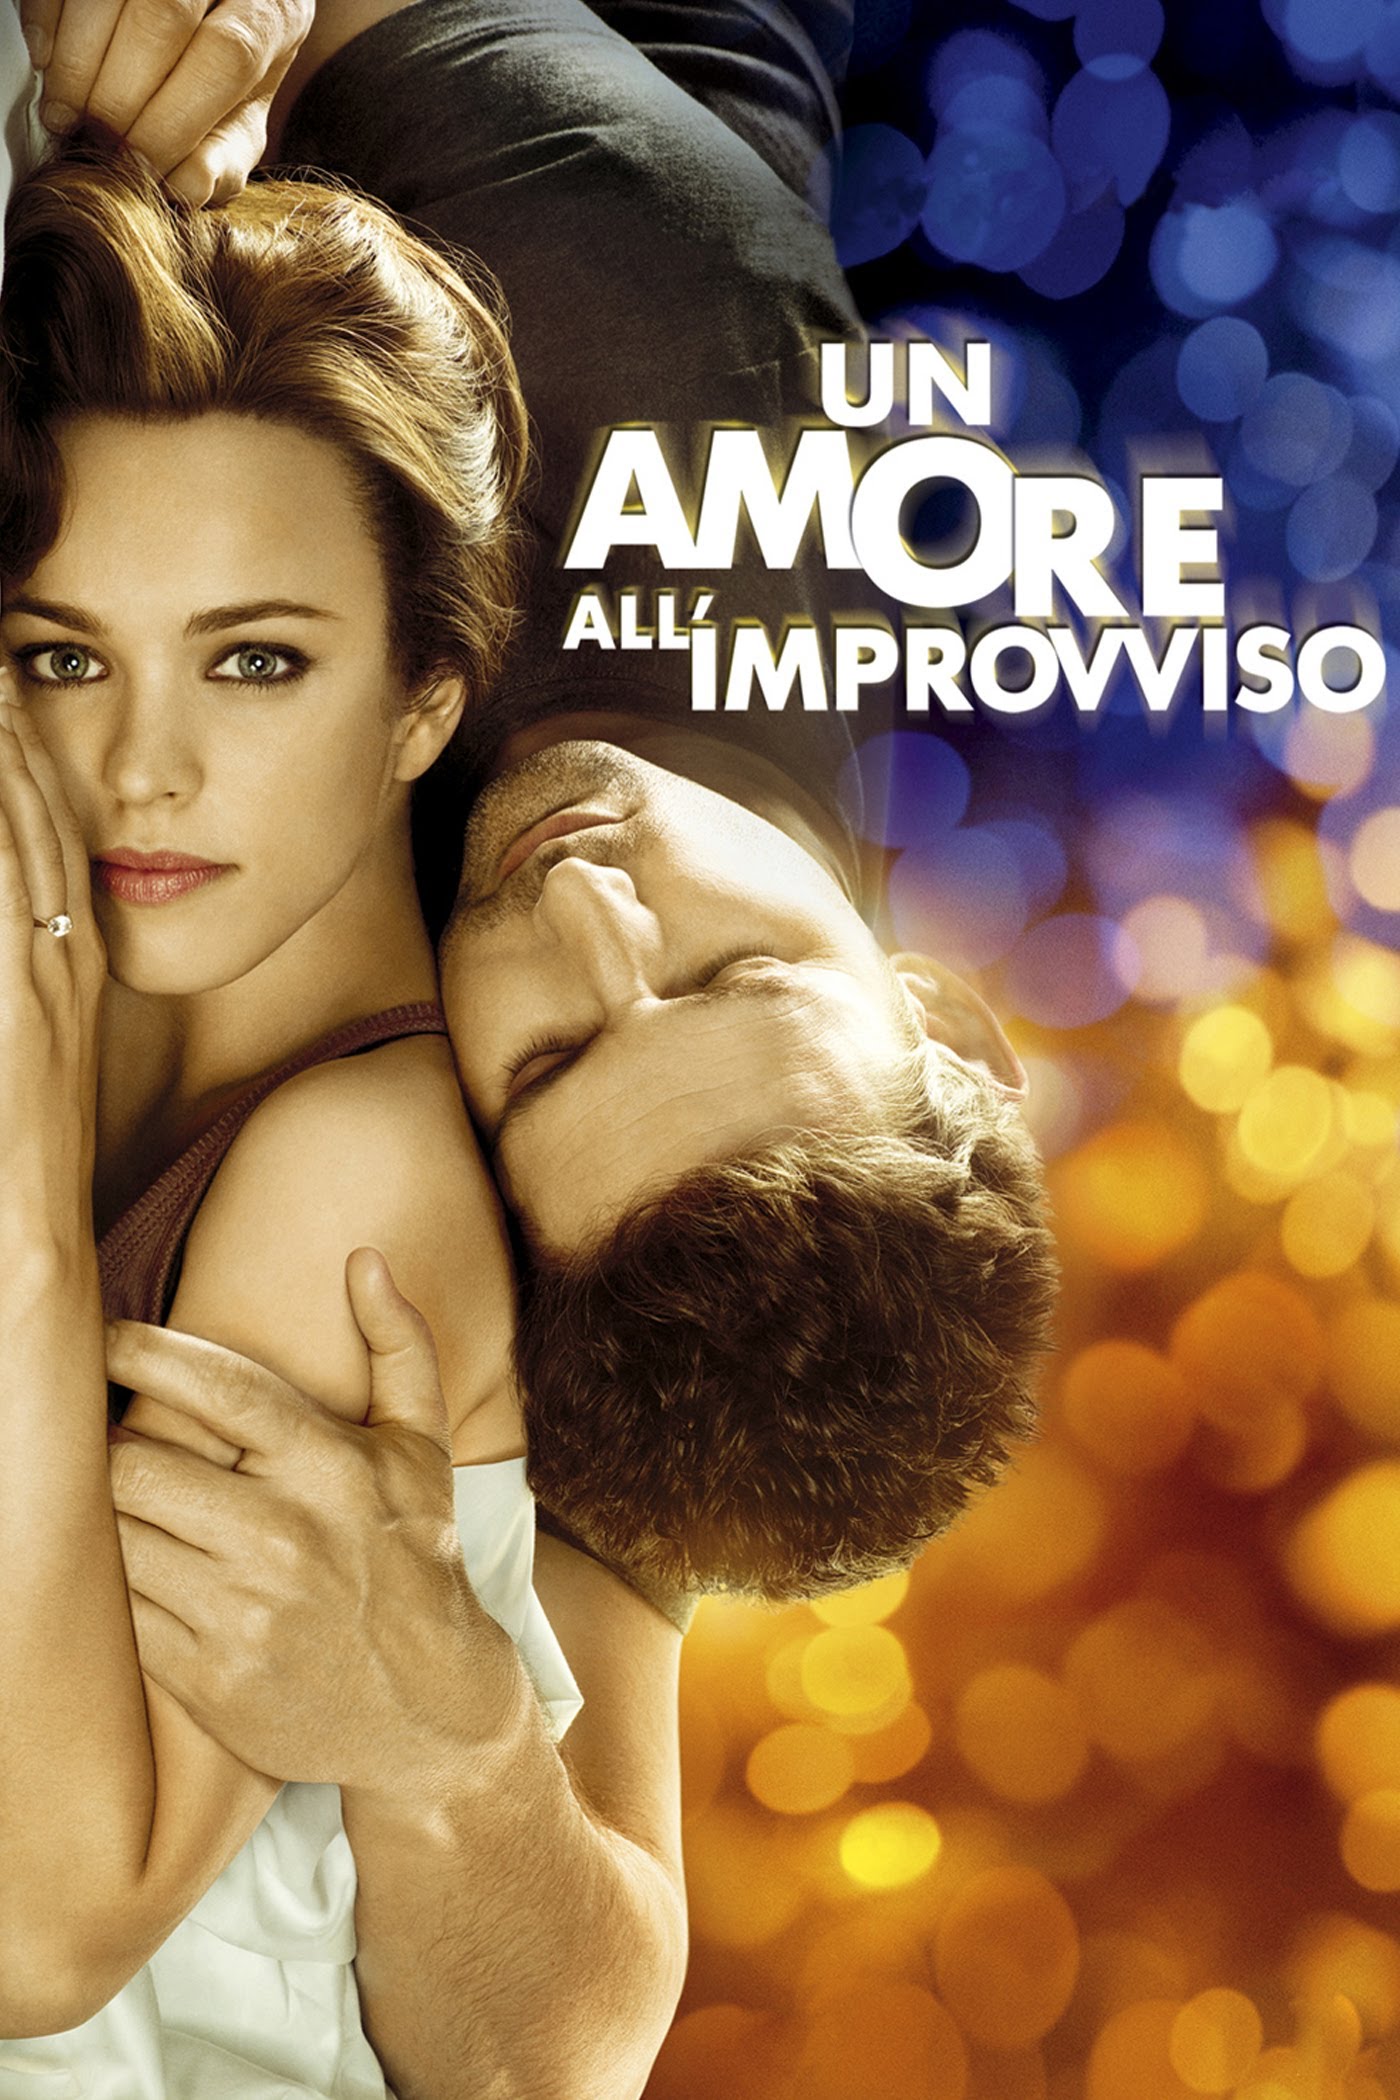 Un amore all’improvviso [HD] (2009)